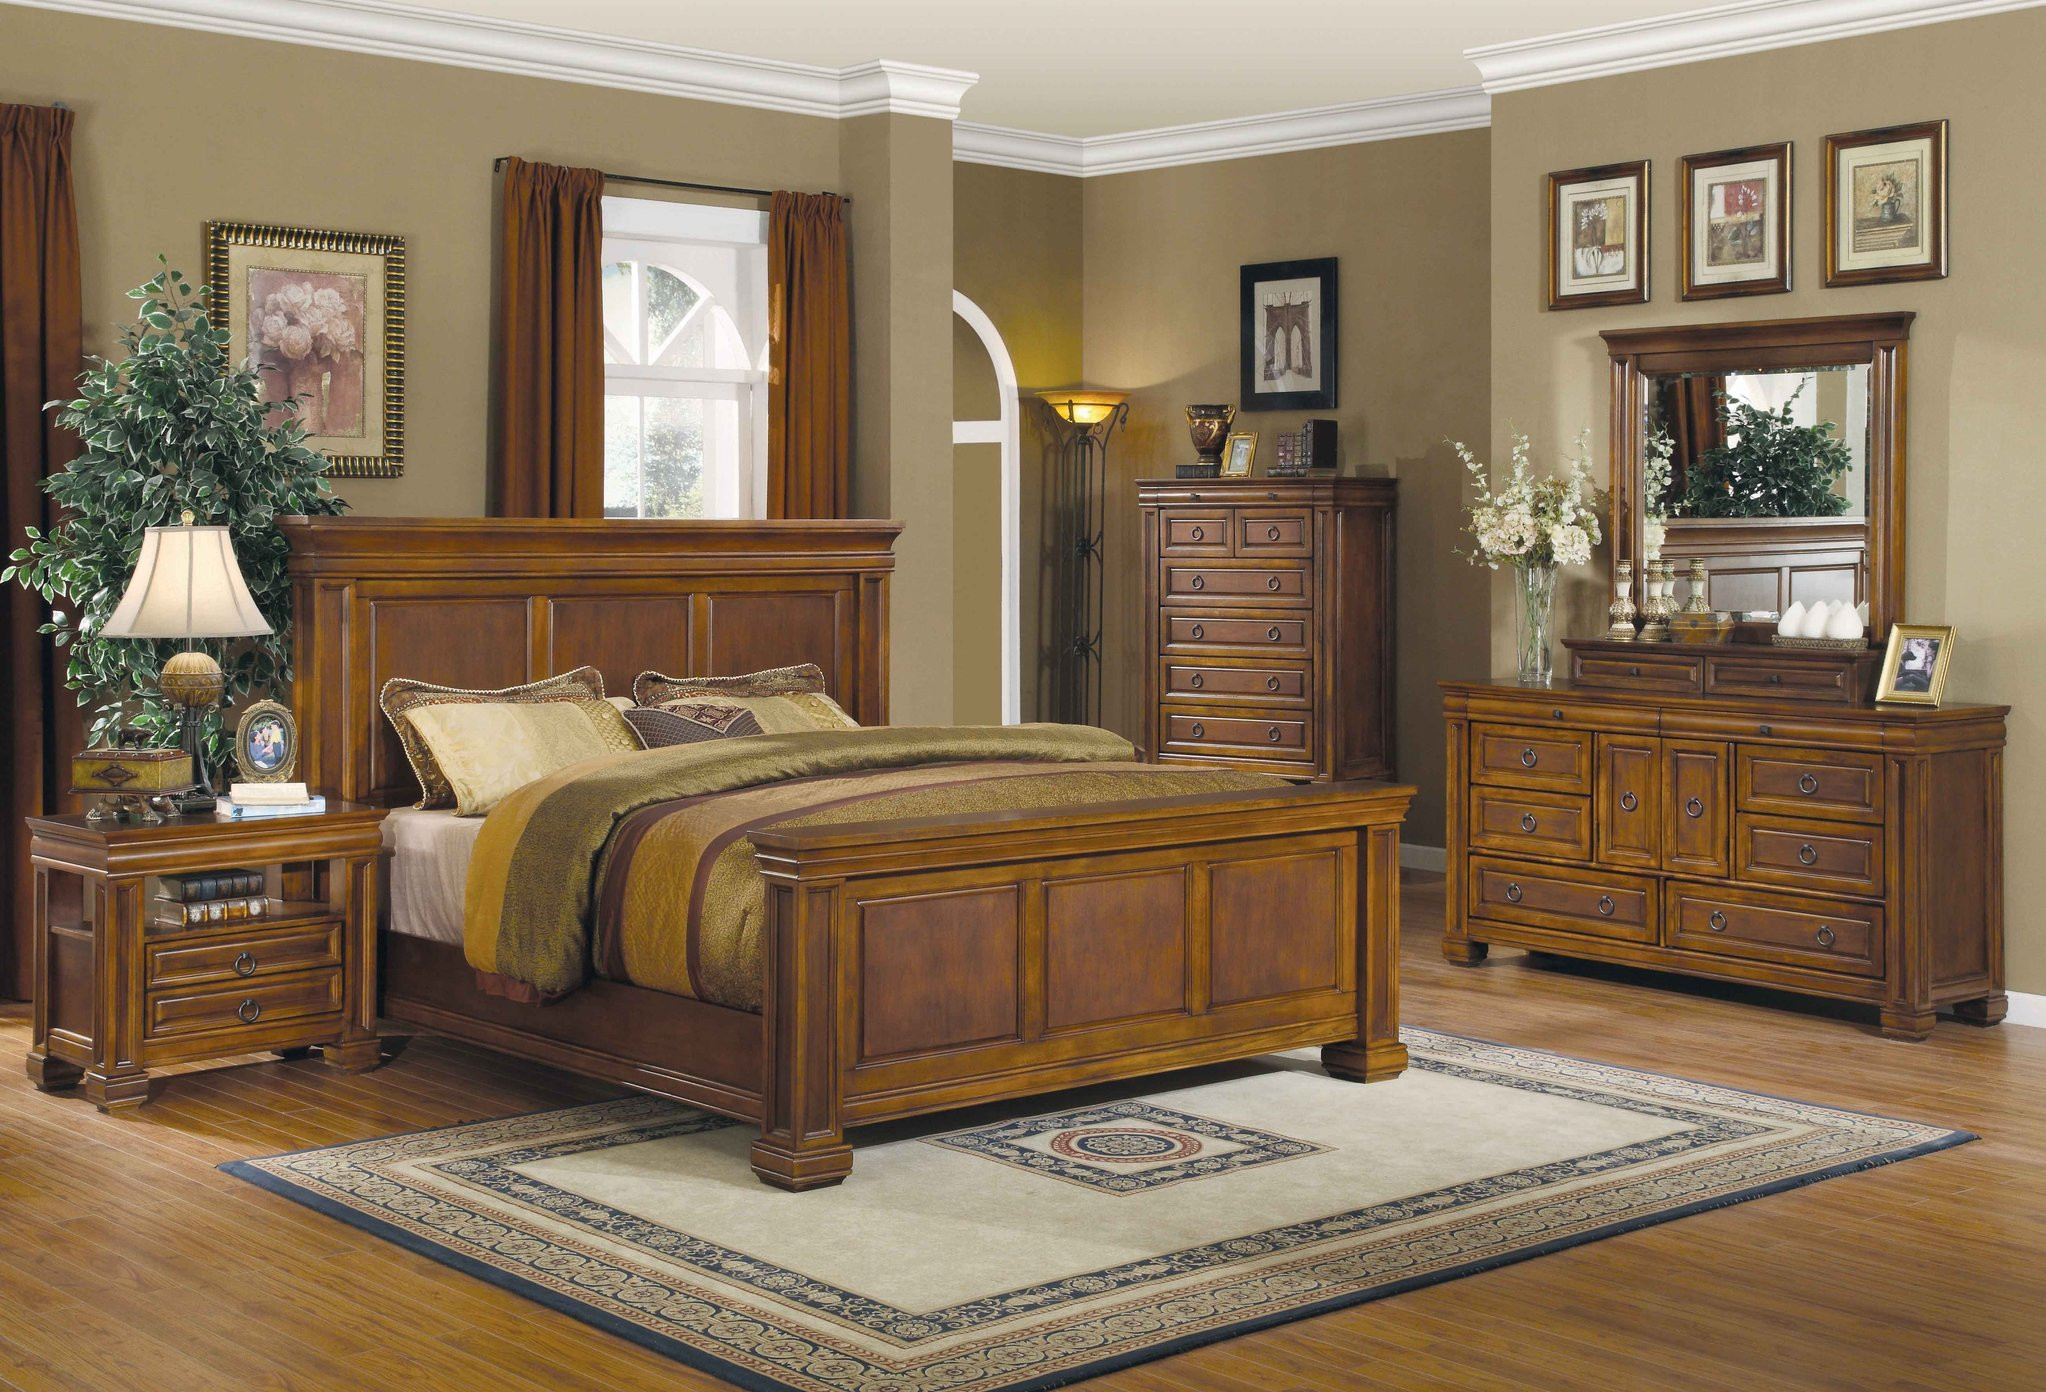 Rustic Bedroom Sets King
 Antique Rustic Bedroom Furniture Wood King and Queen